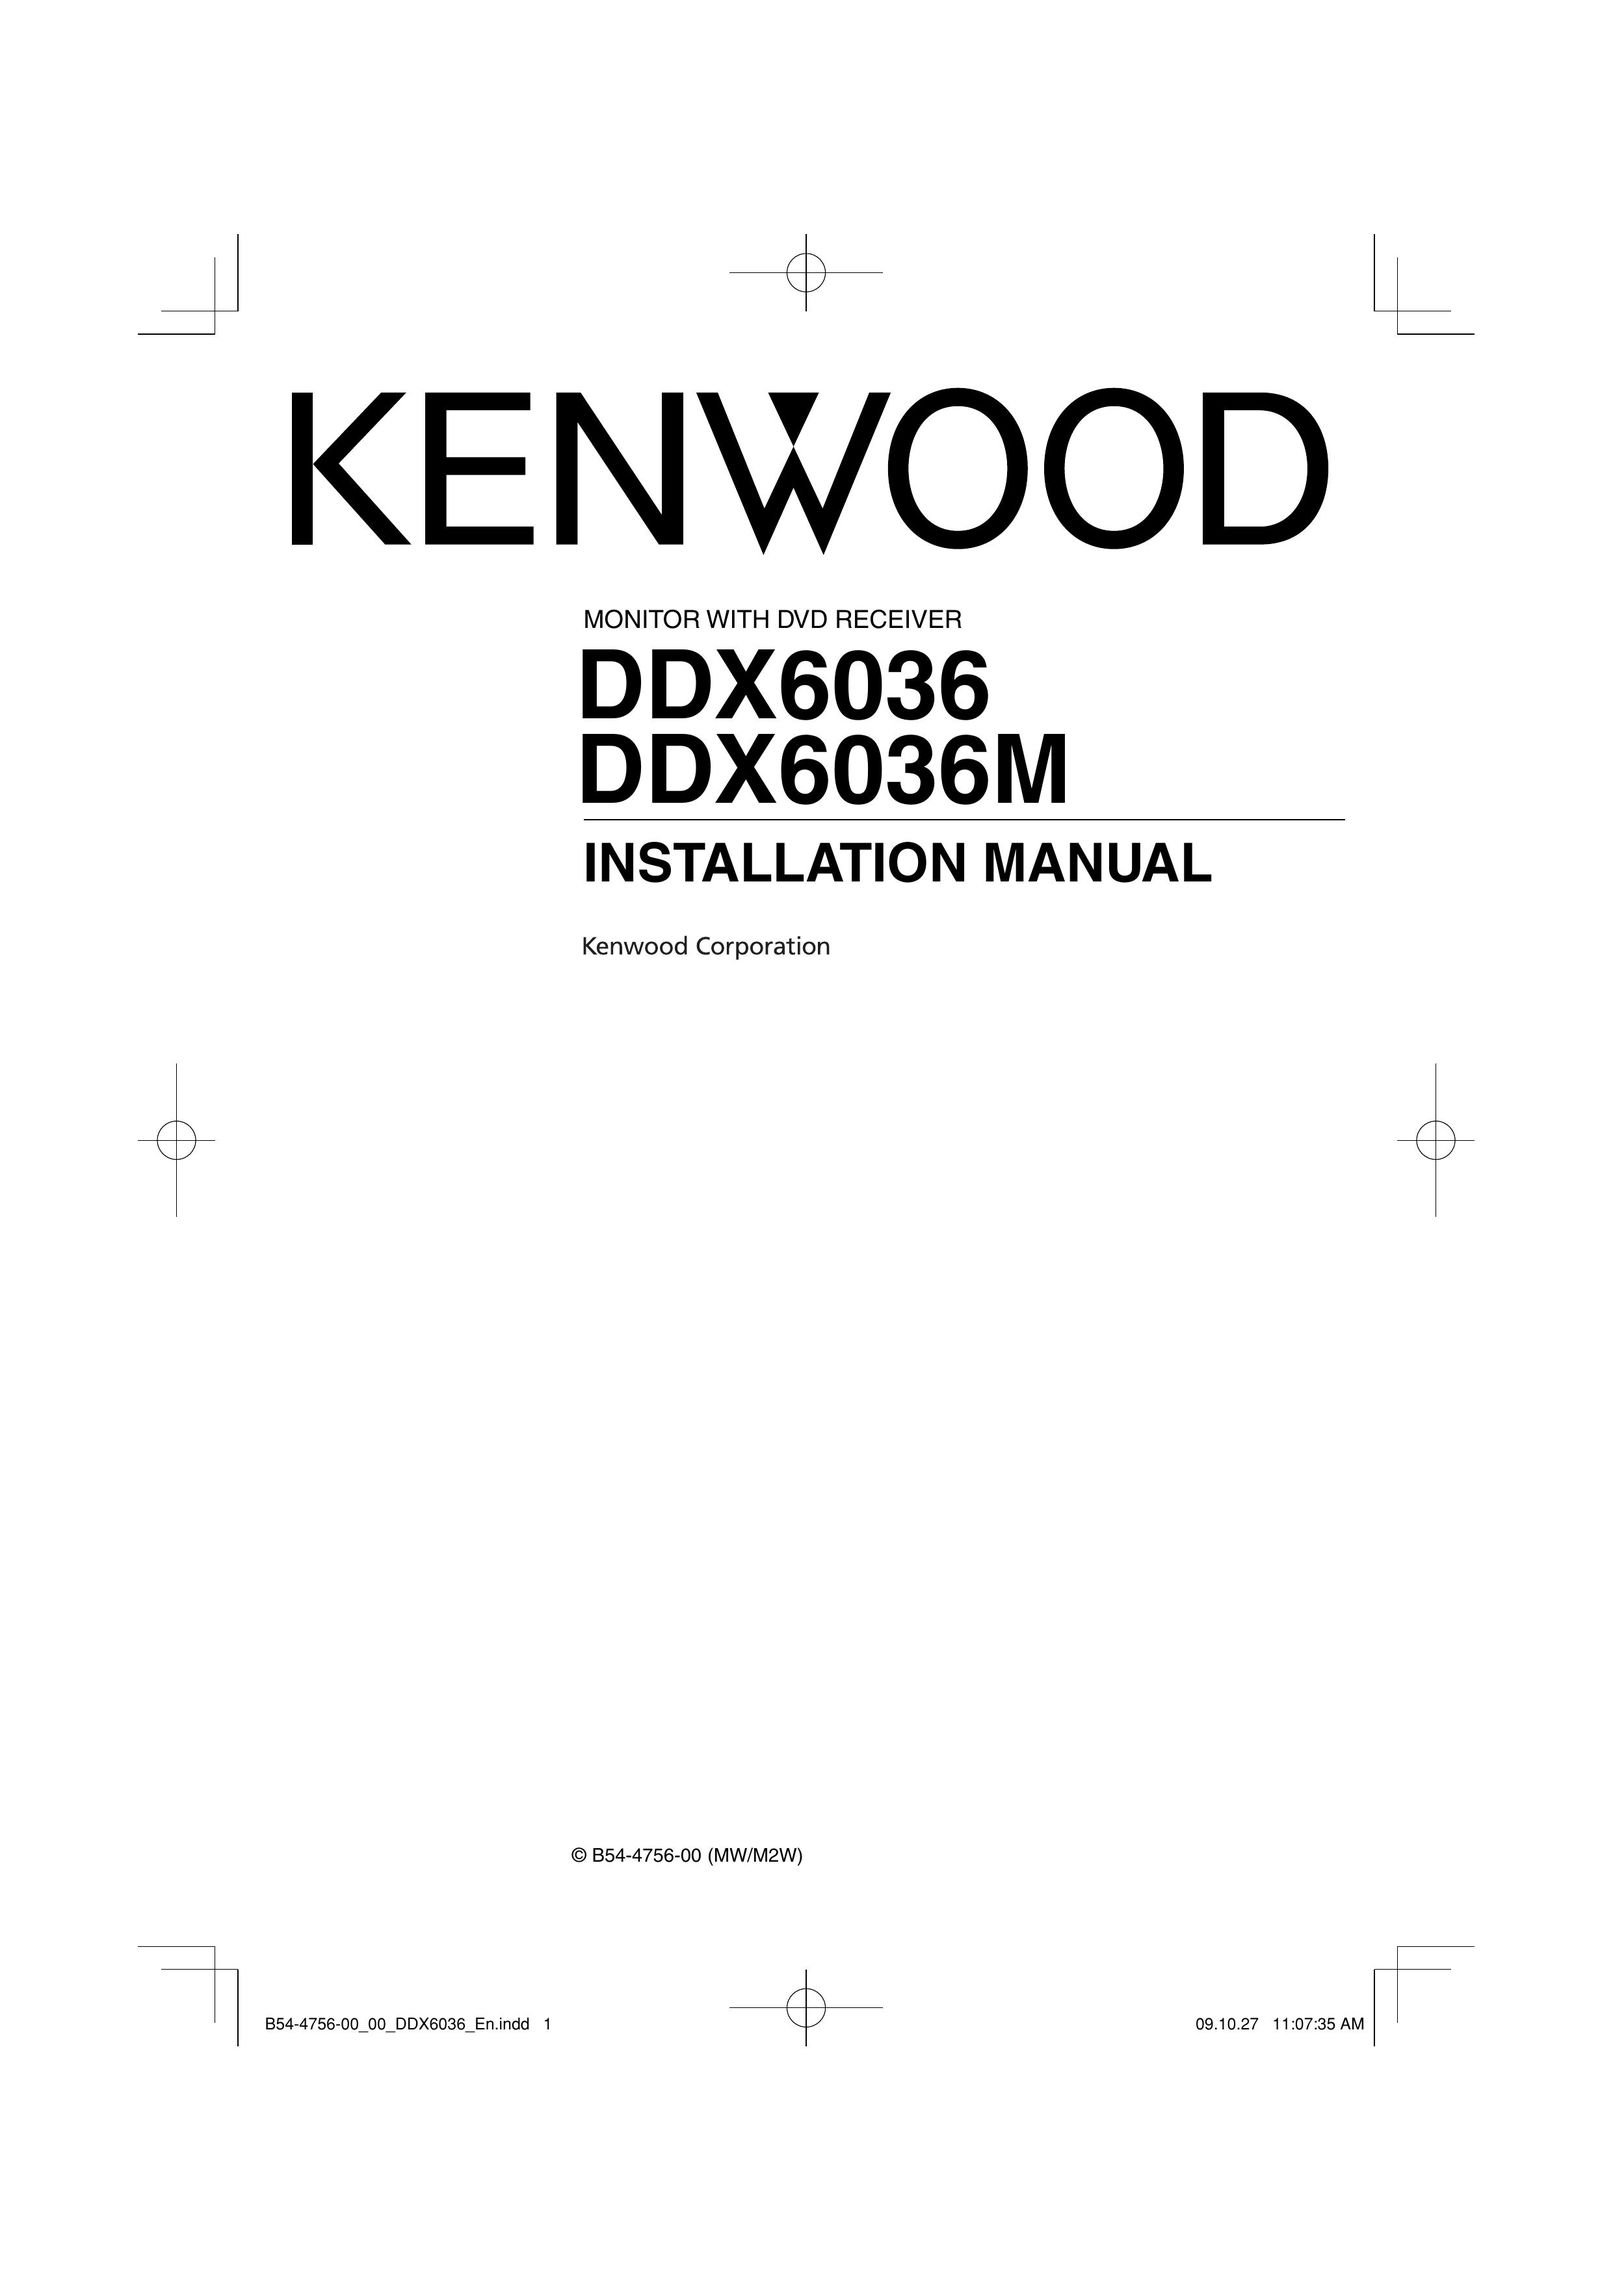 Kenwood DDX6036M Car Video System User Manual